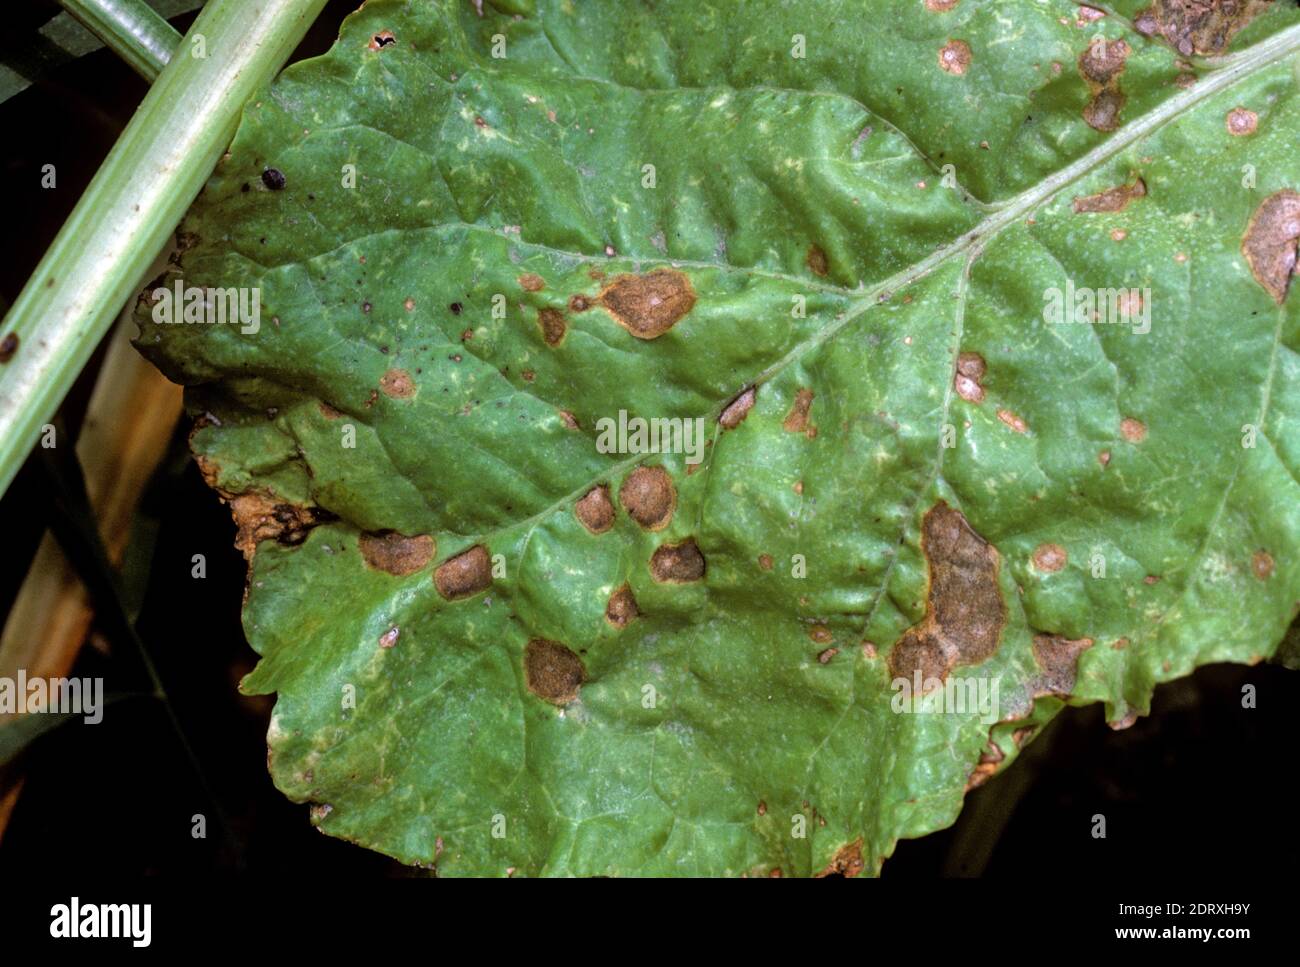 Phoma leaf spot (Phoma betae) necrotic fungal disease lesions on a sugar beet leaf, Greece Stock Photo